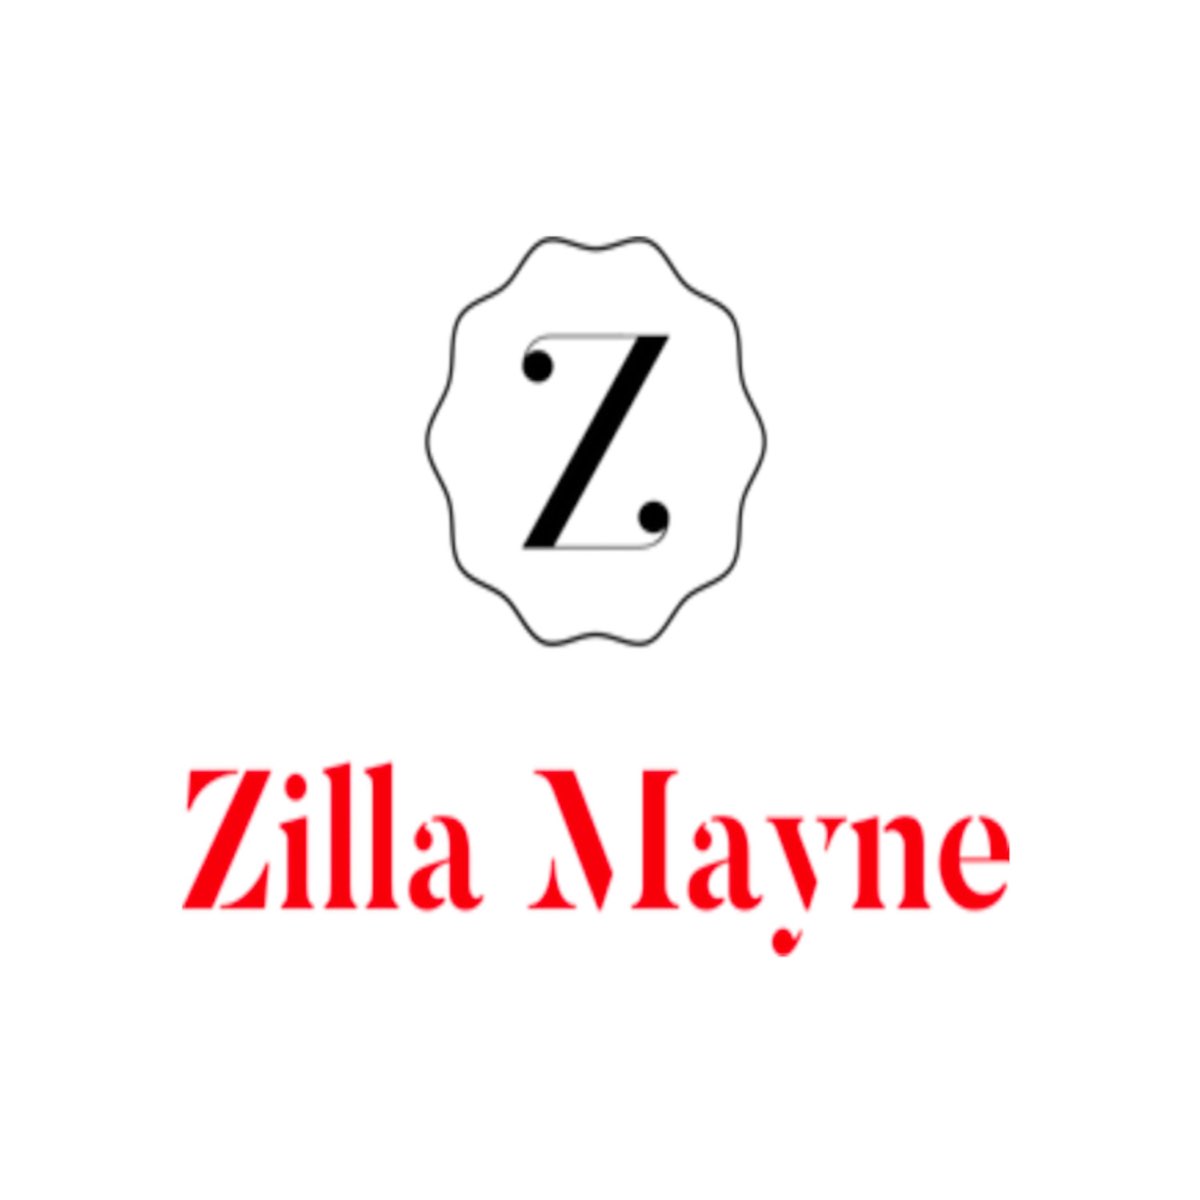 ‎Zm - Album by Zilla Mayne - Apple Music